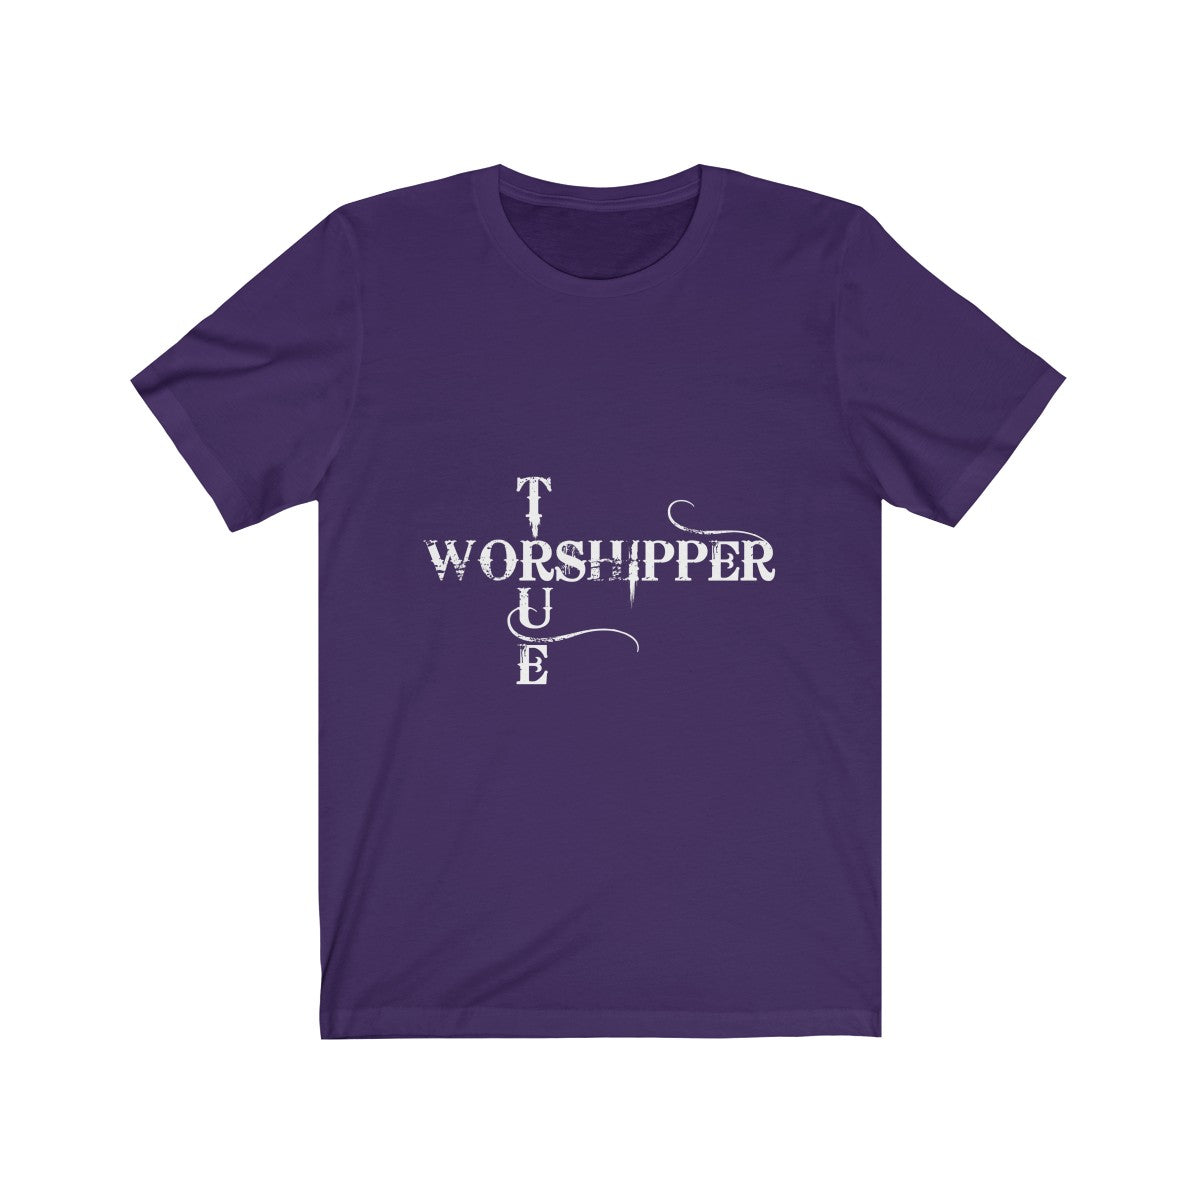 True Worshipper Tee - Red